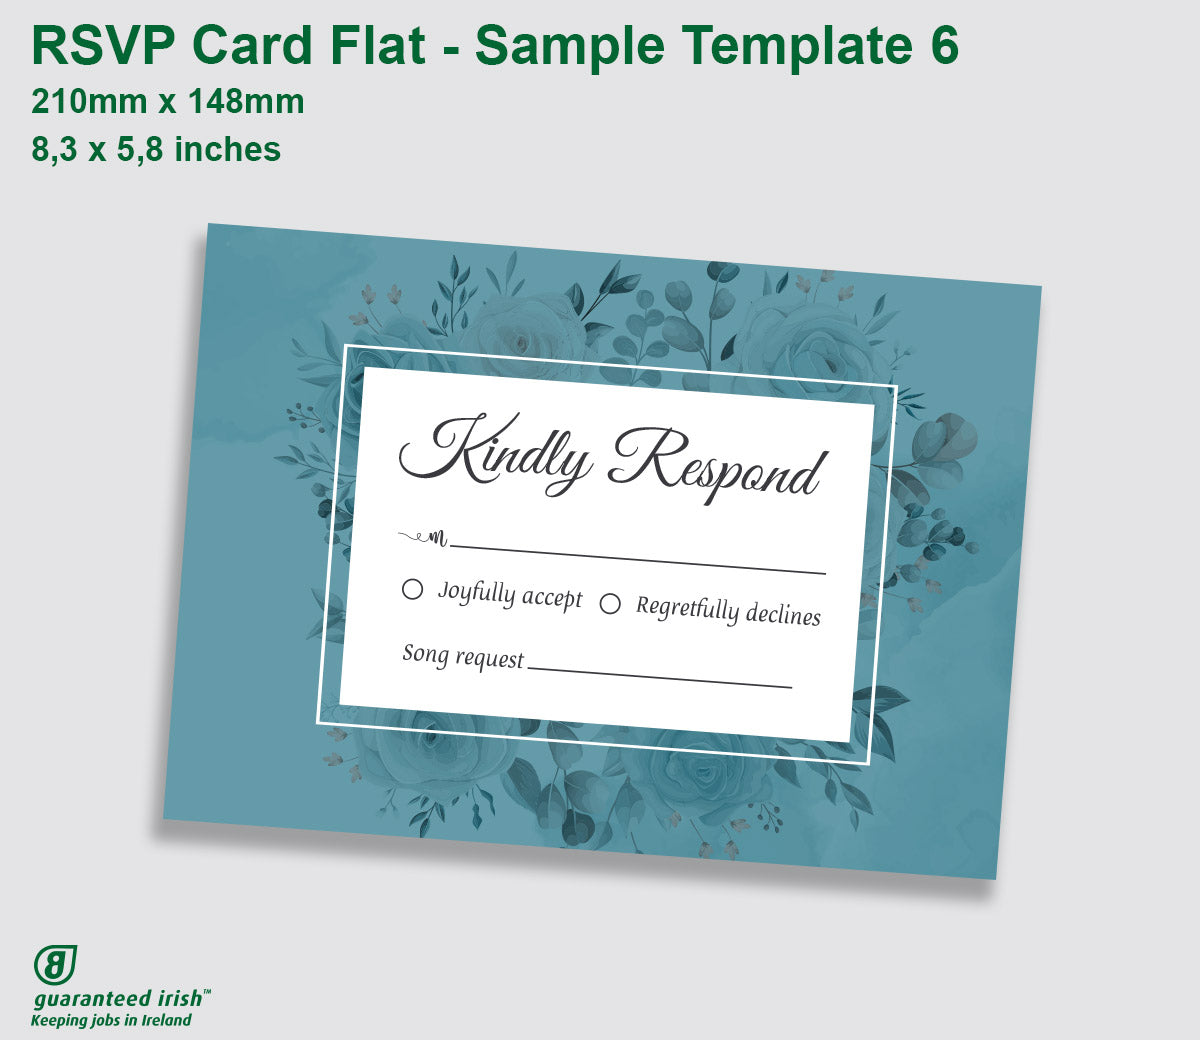 RSVP Card - Sample 6